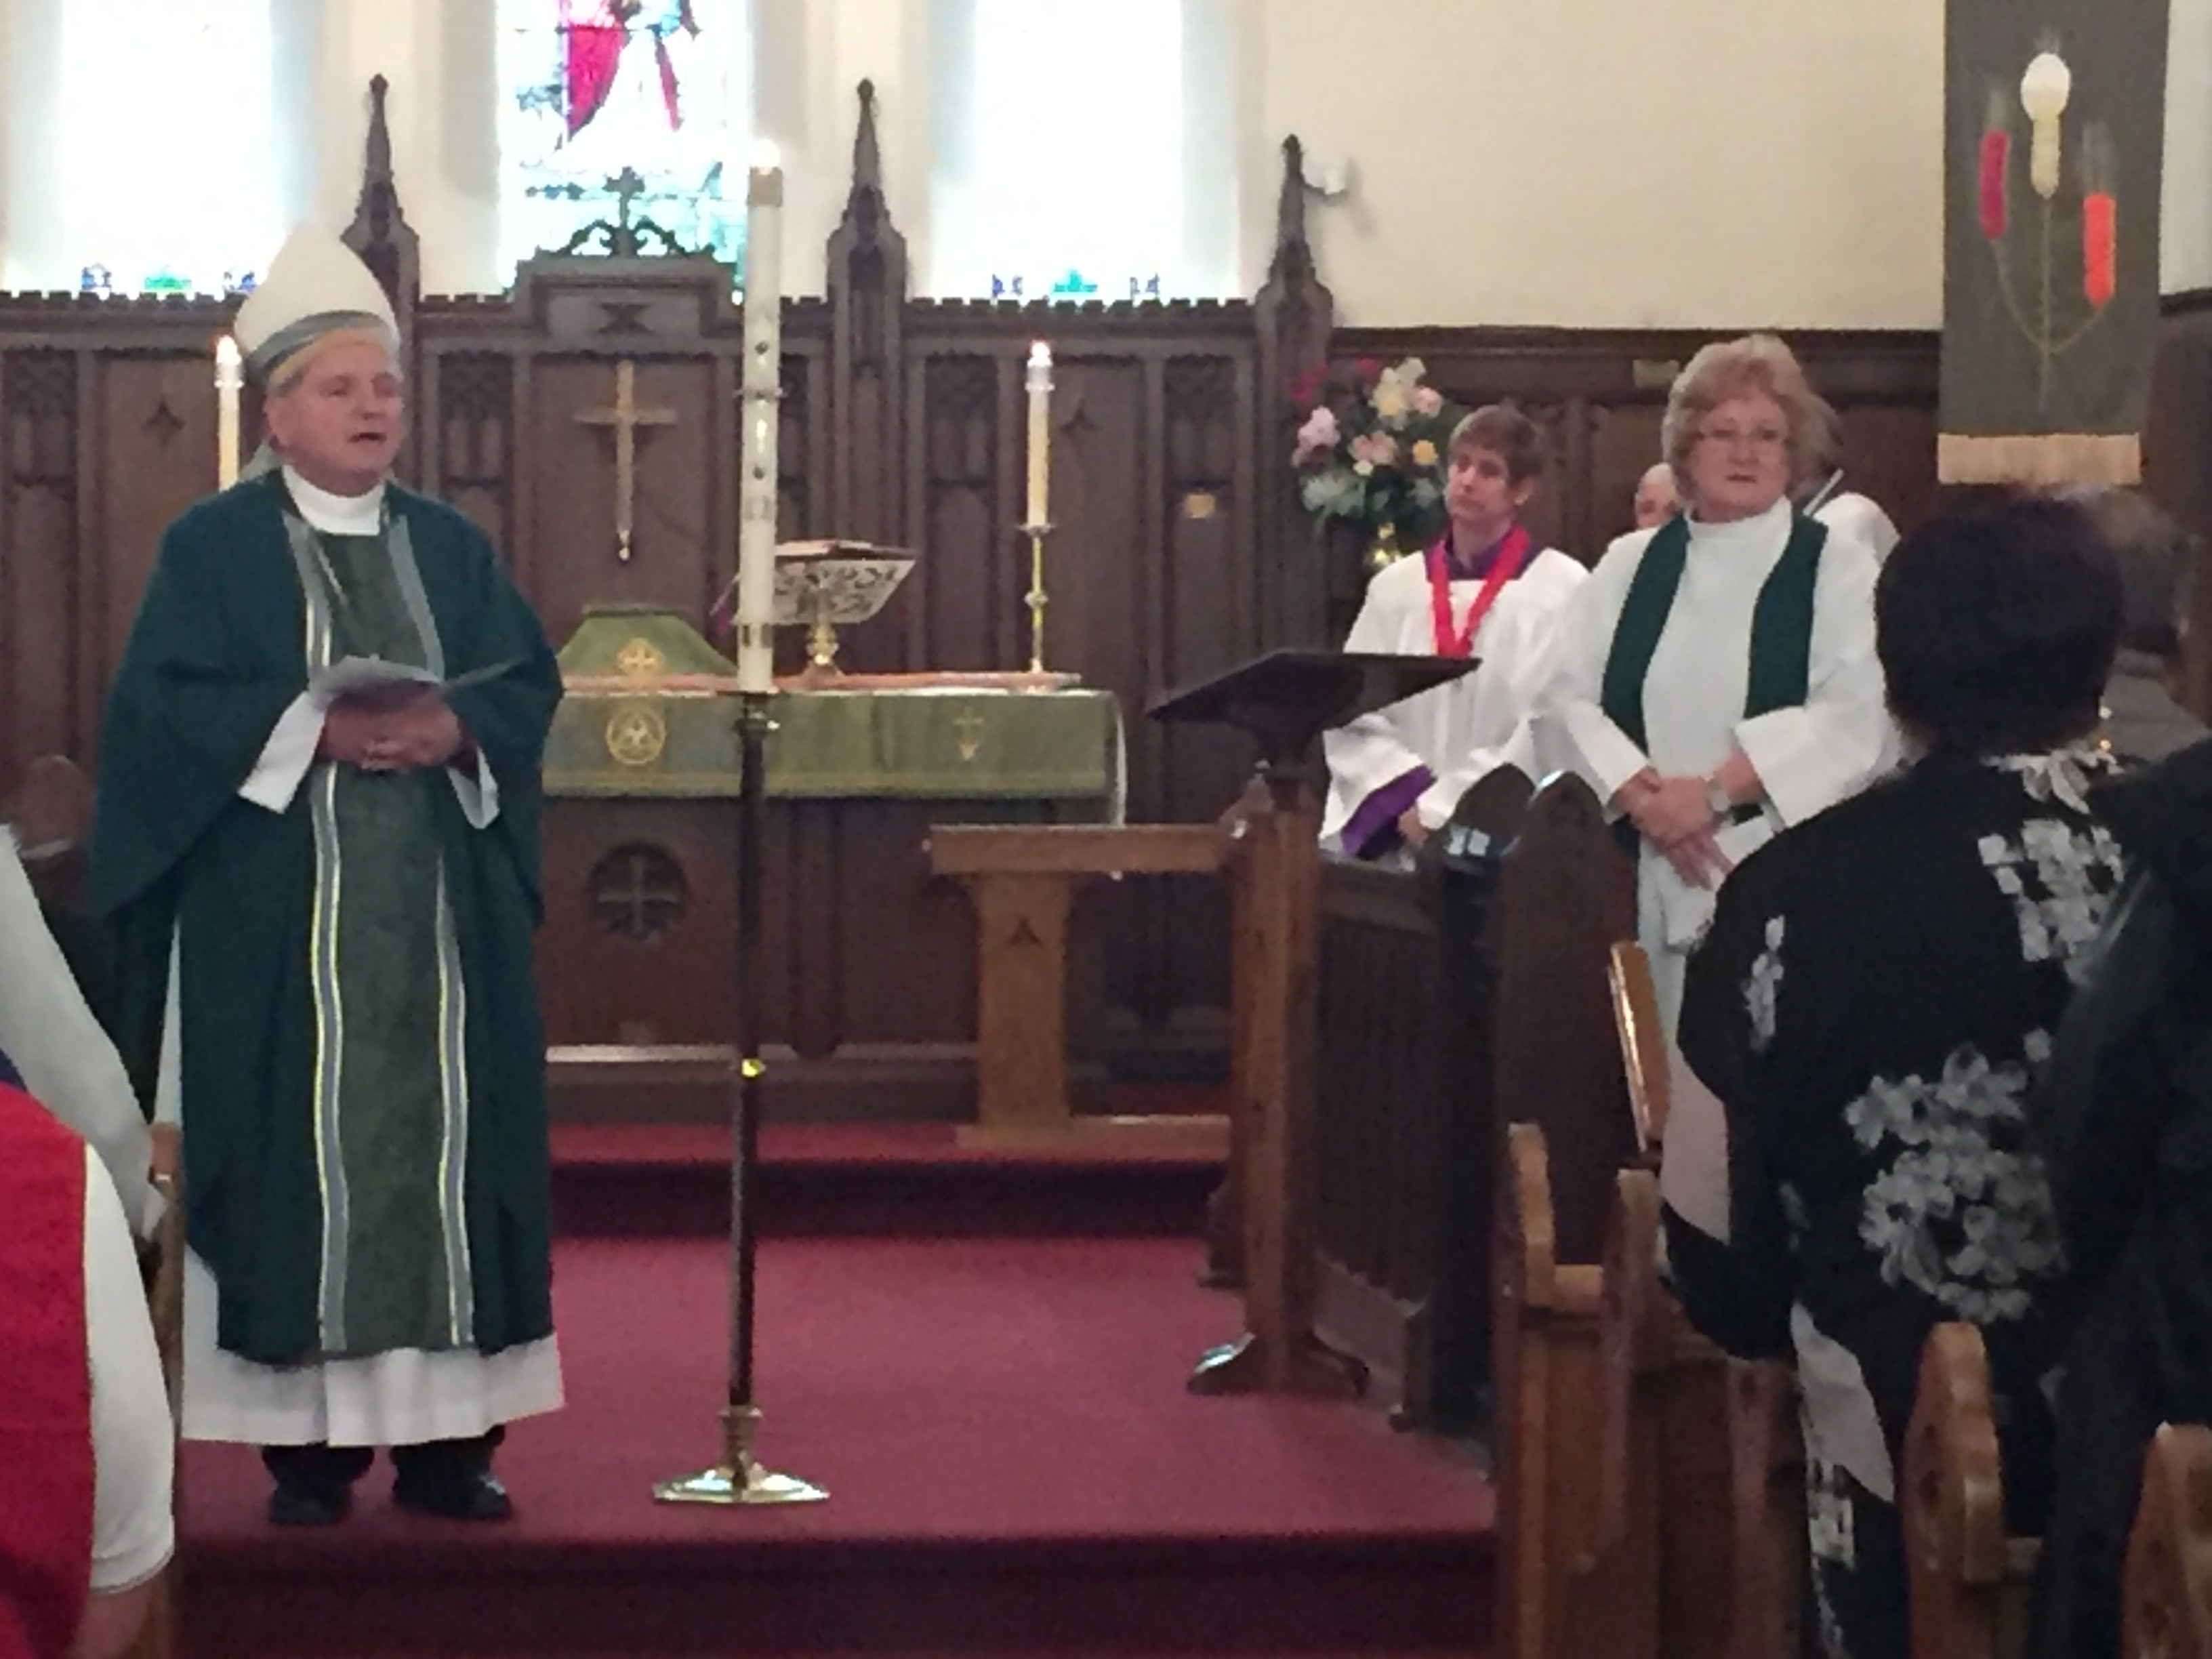 Bishop Michael Bird speaks to the congregation